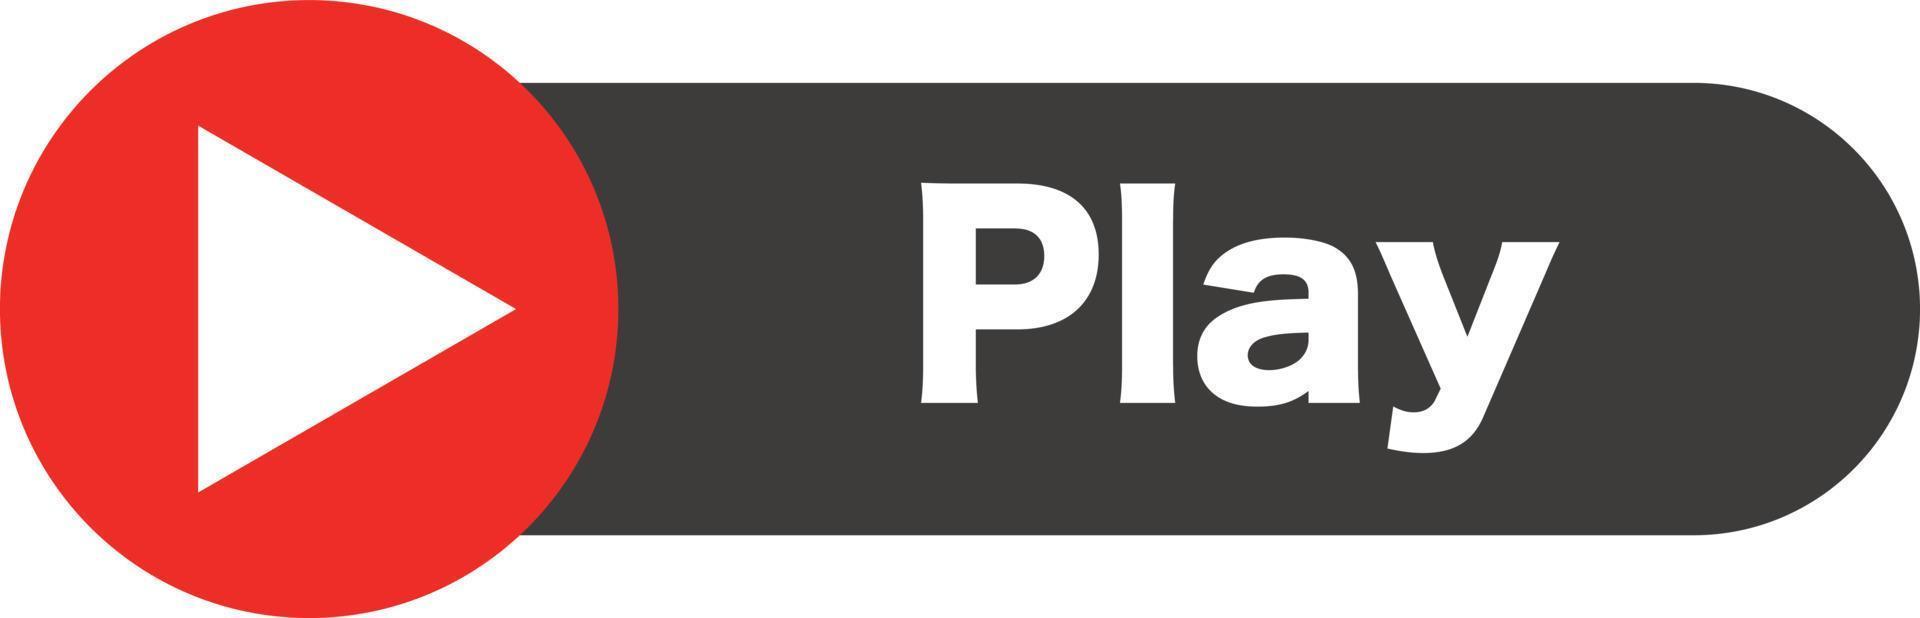 Play button and play logo of Play. vector. vector